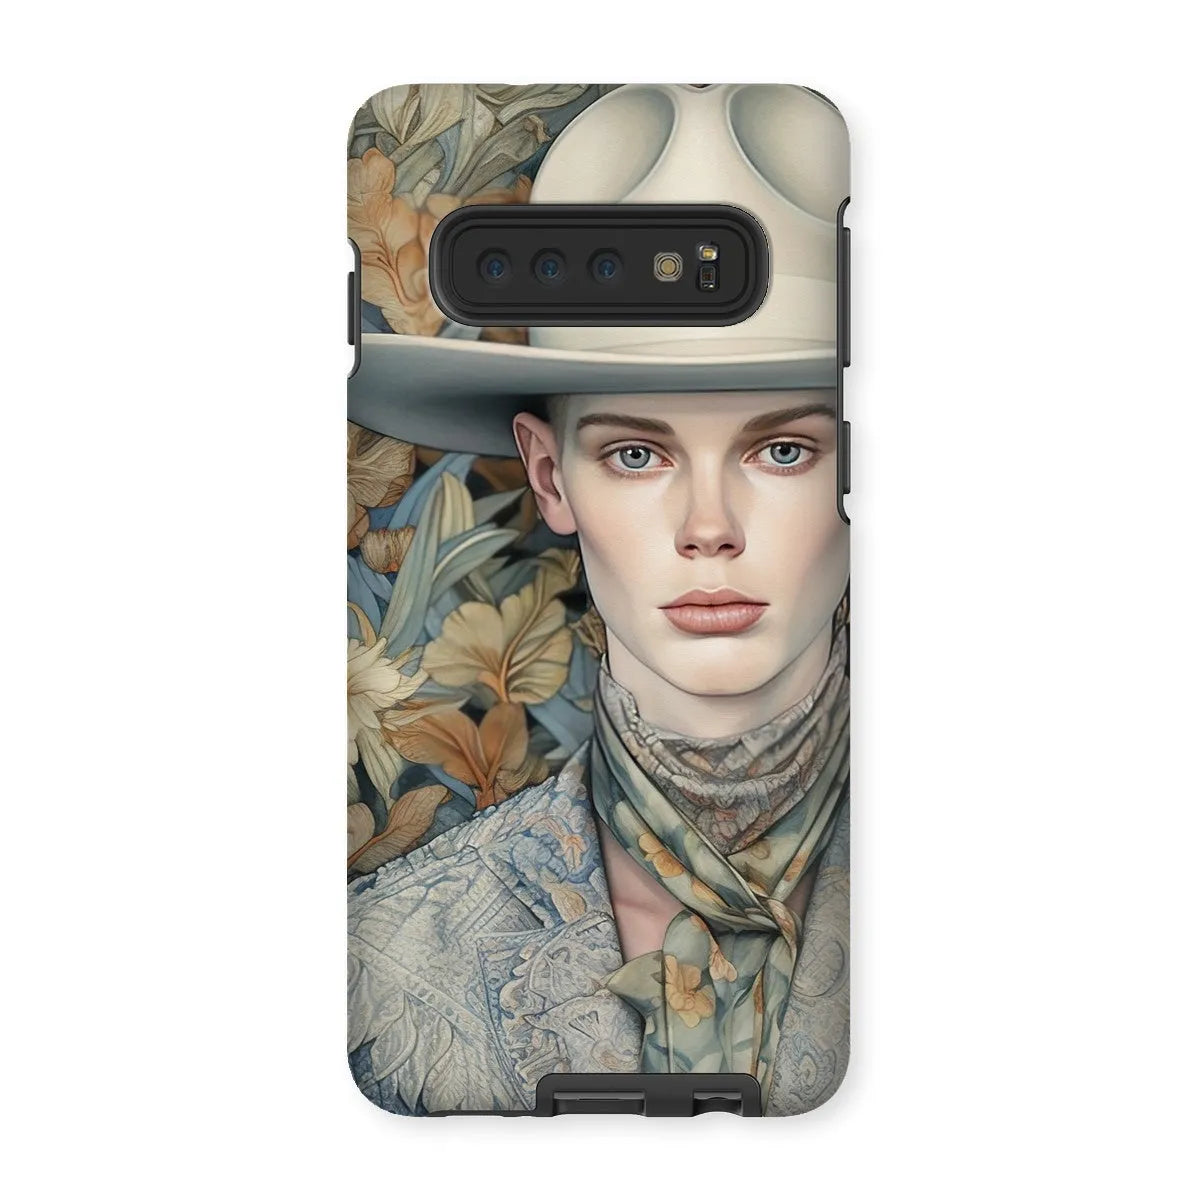 Jasper The Gay Cowboy - Dandy Gay Aesthetic Art Phone Case - Samsung Galaxy S10 / Matte - Mobile Phone Cases